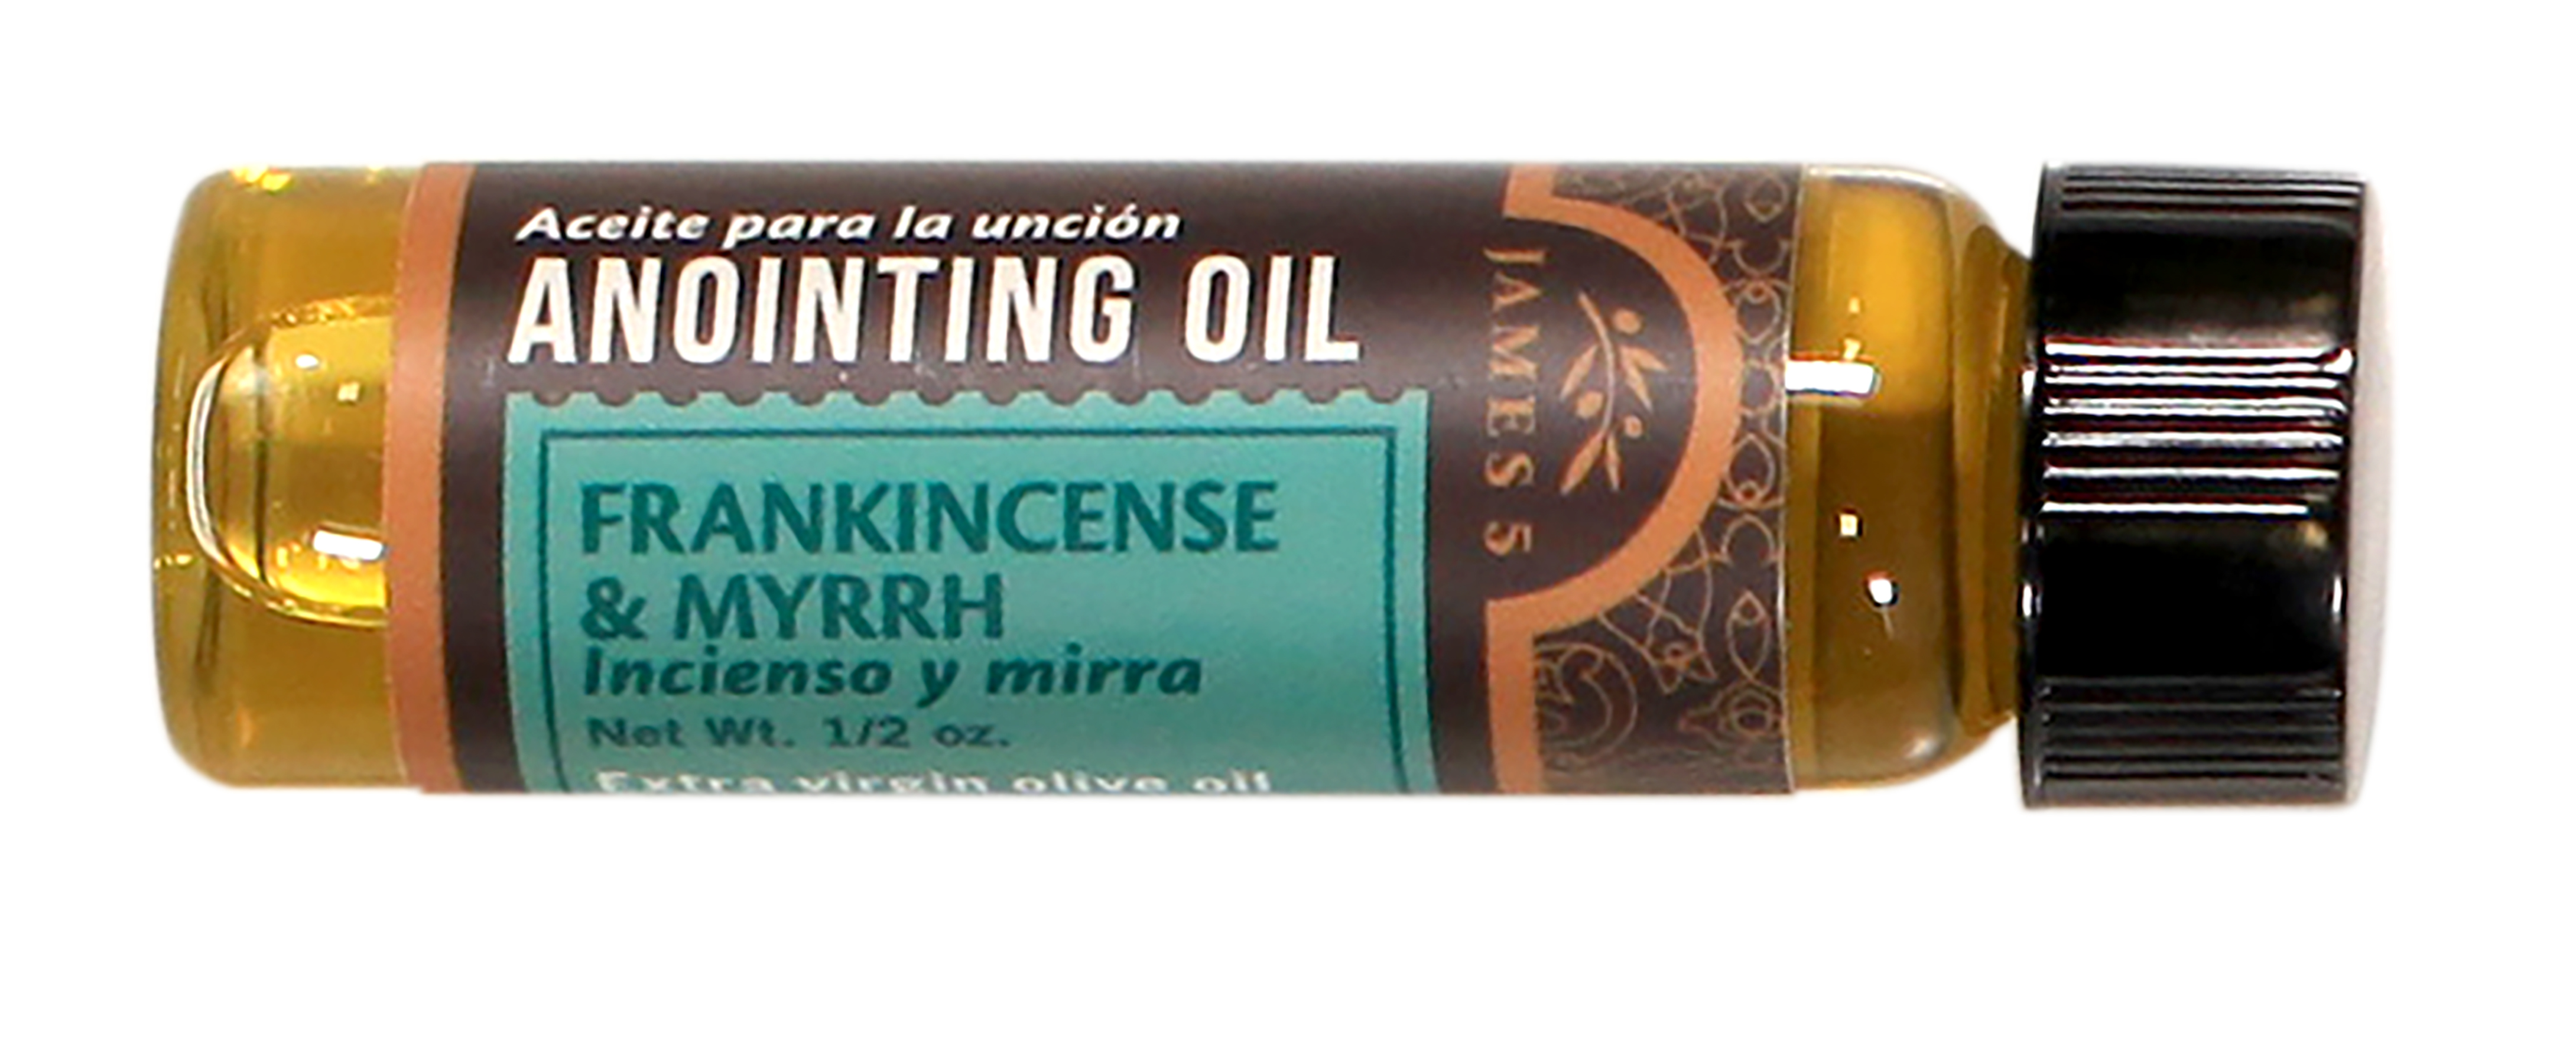 Anointing Oil - Frankincense & Myrrh, 1/2 oz - Goodruby Christian Bookstore